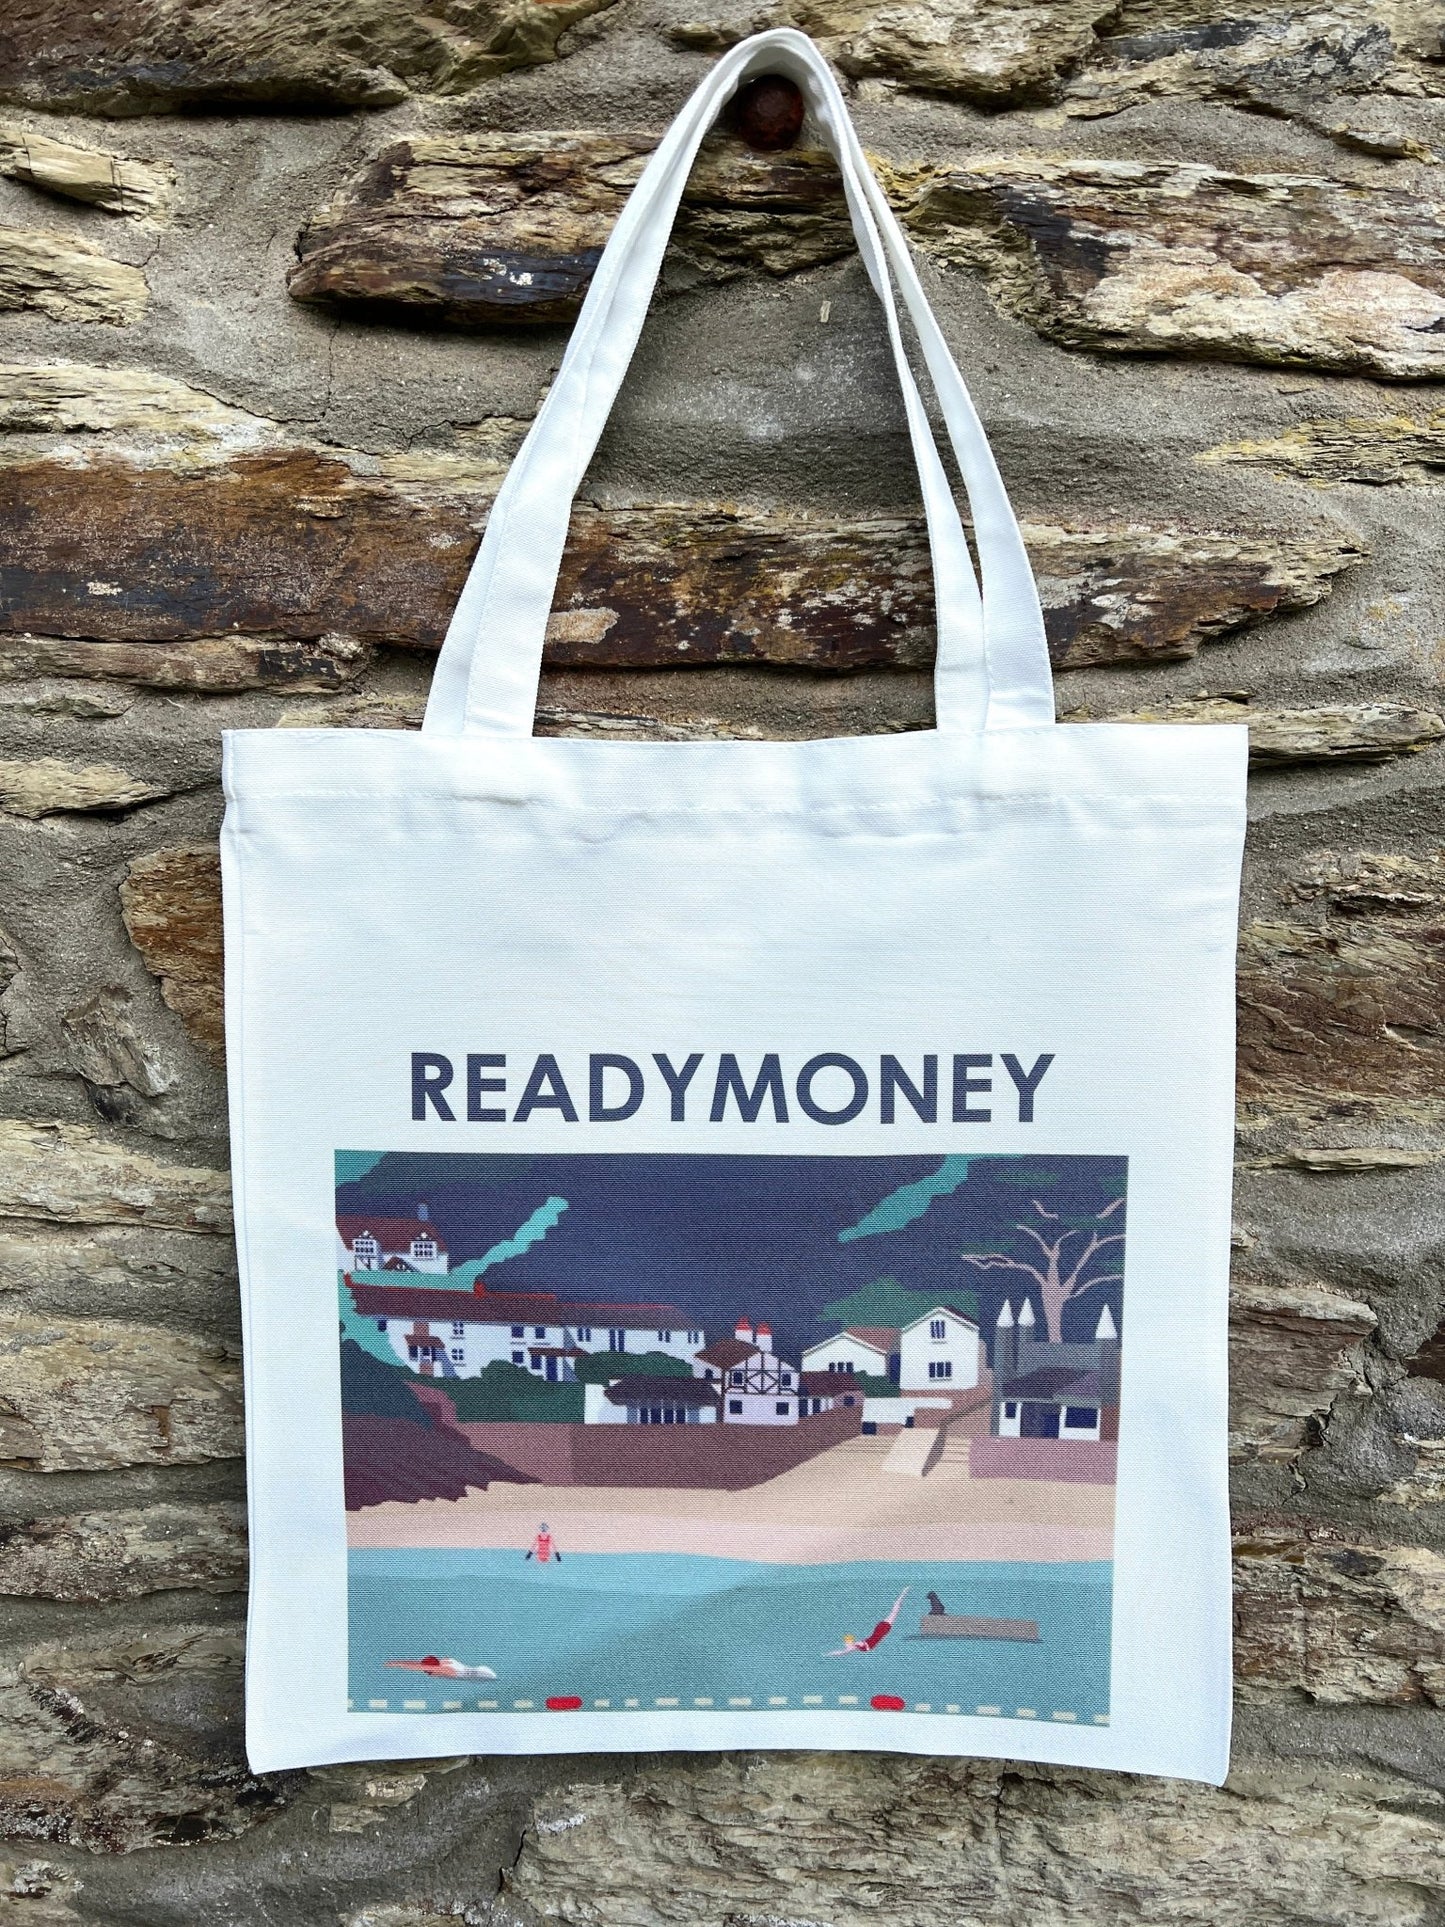 Readymoney Cove Tote Bags - Readymoney Beach Shop